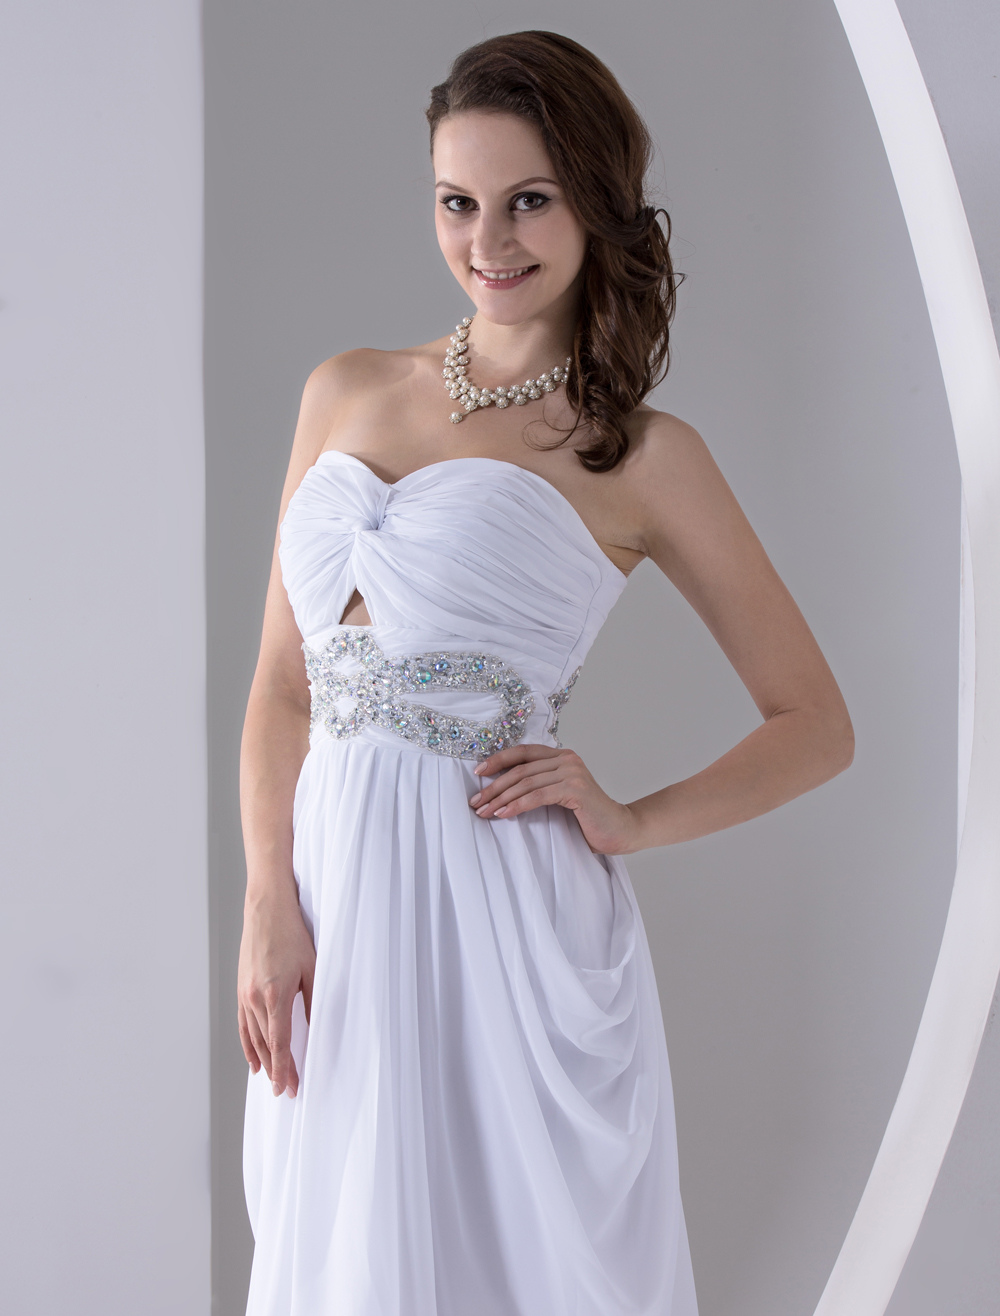 White Prom Dress Rhinestone Strapless Backless Dress - Milanoo.com